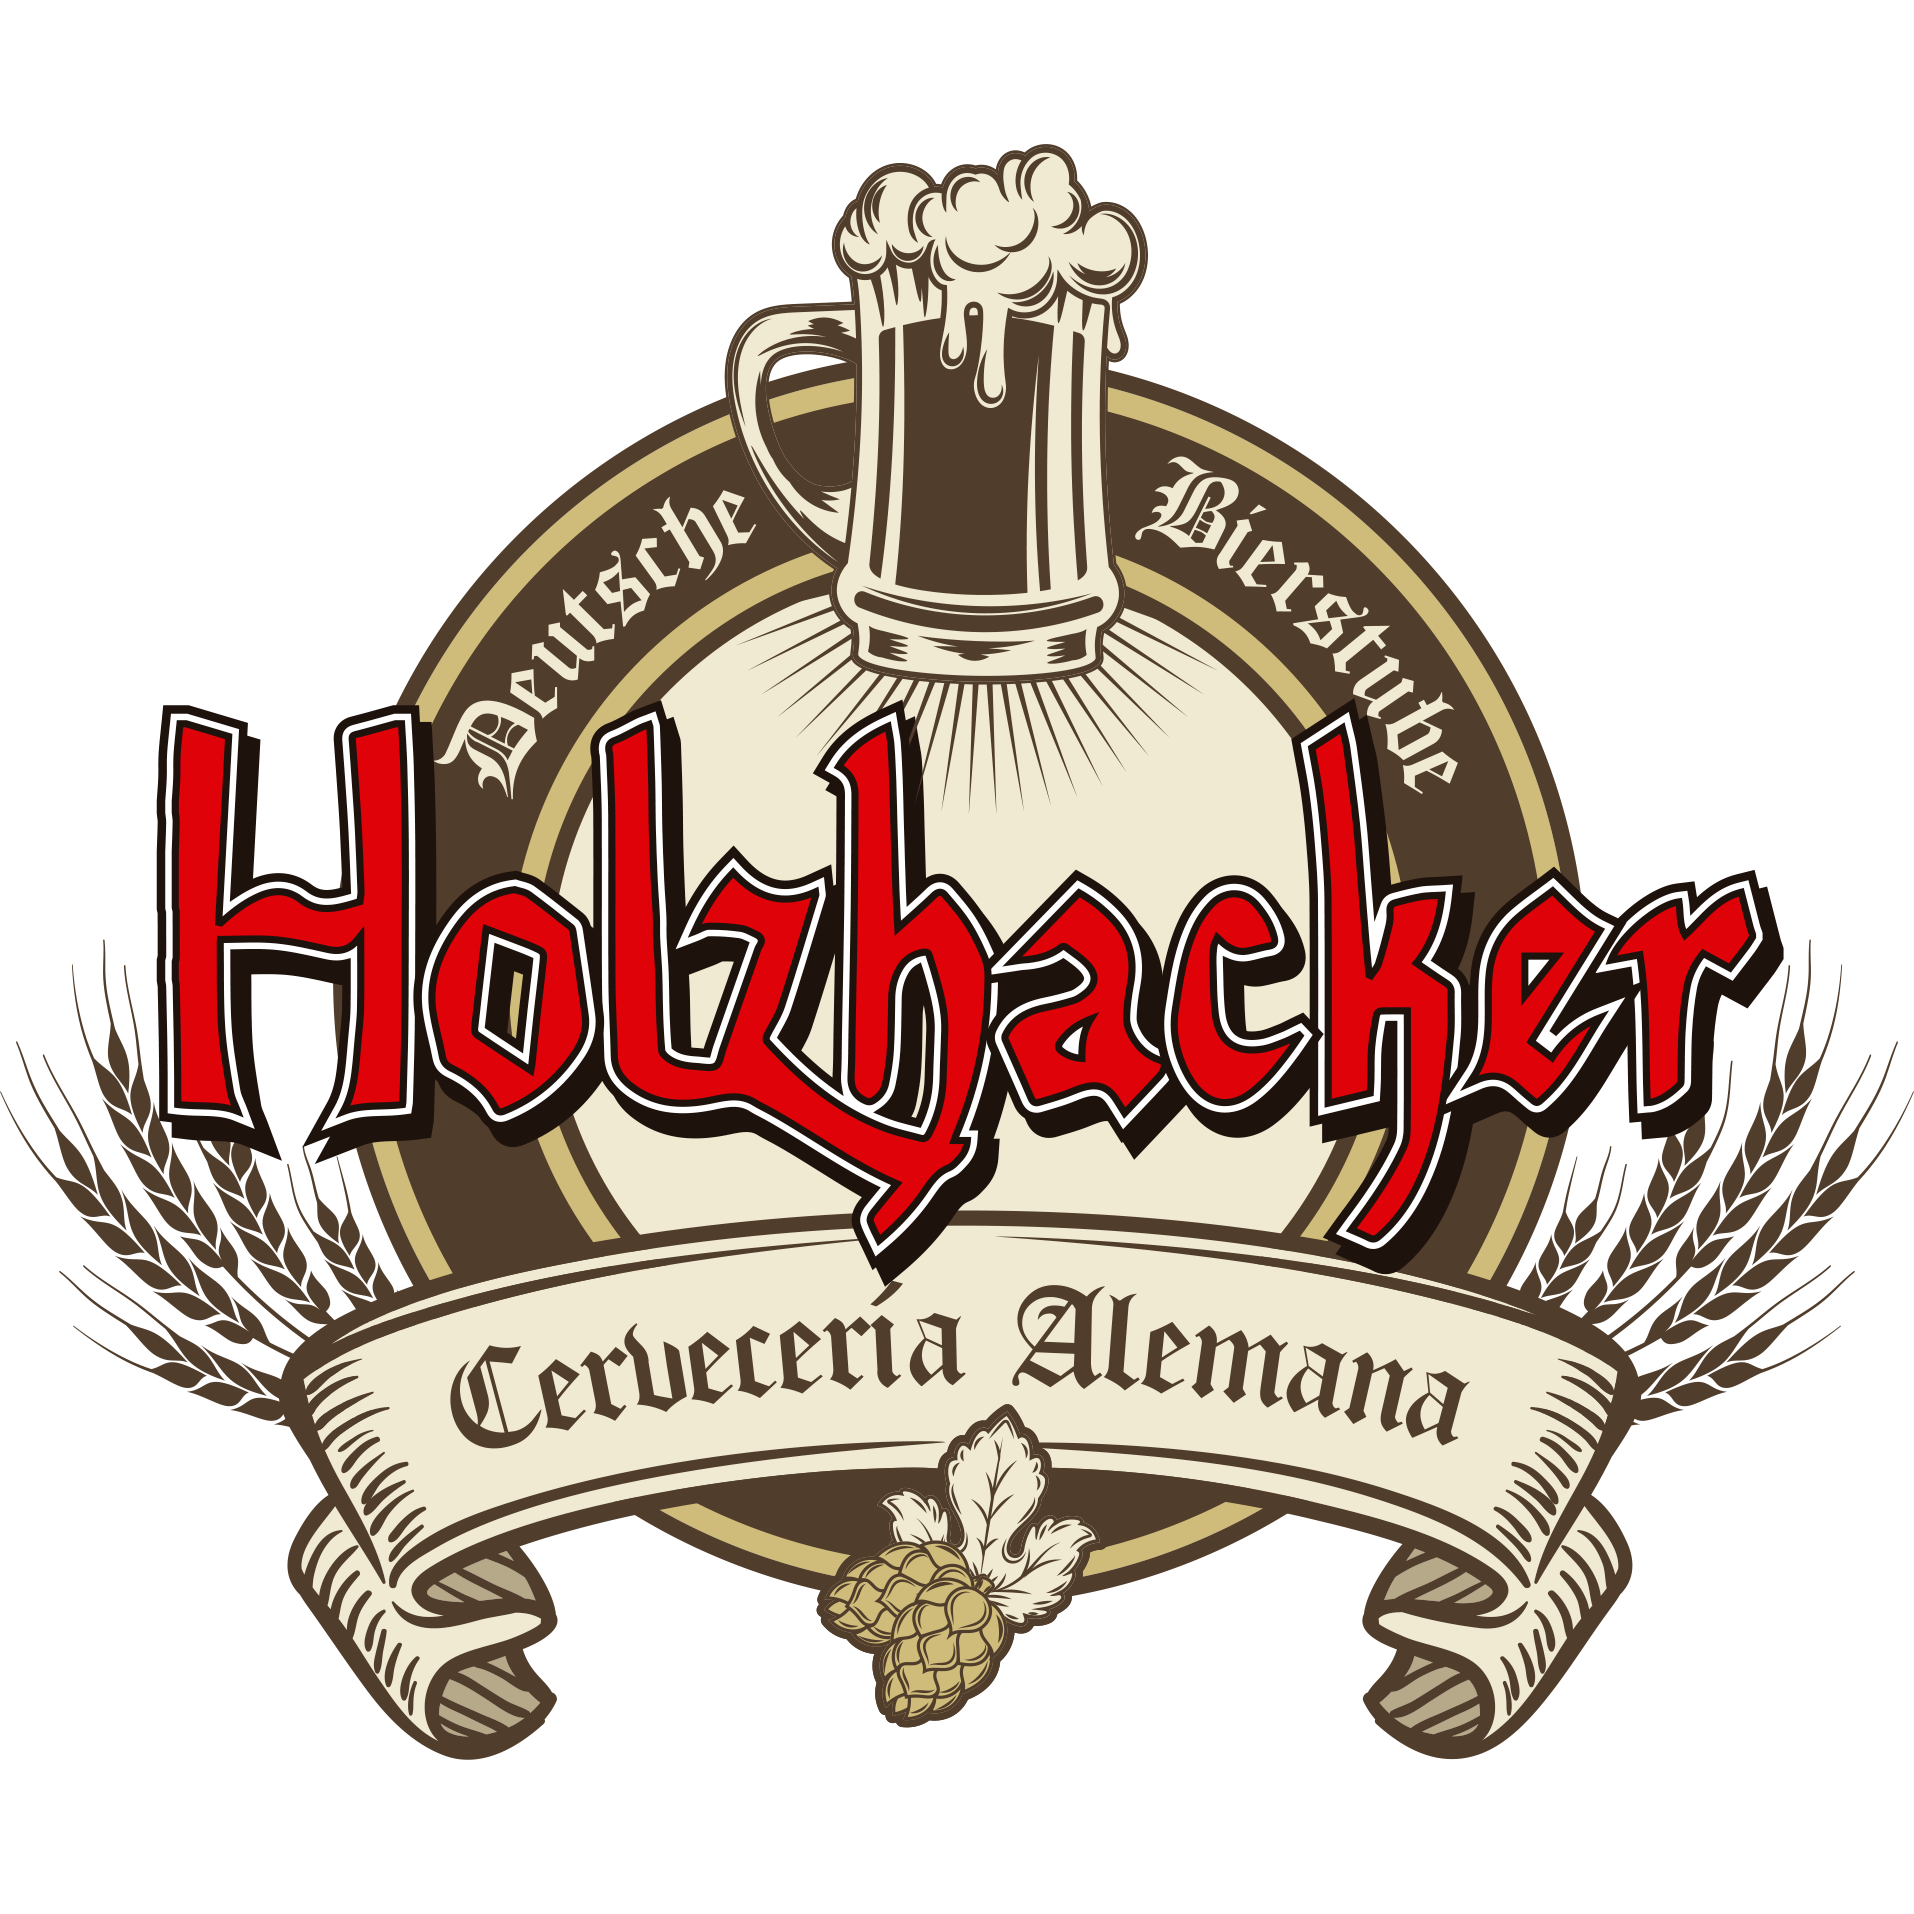 Holzhacker Restaurant y Cerveceria Alemana